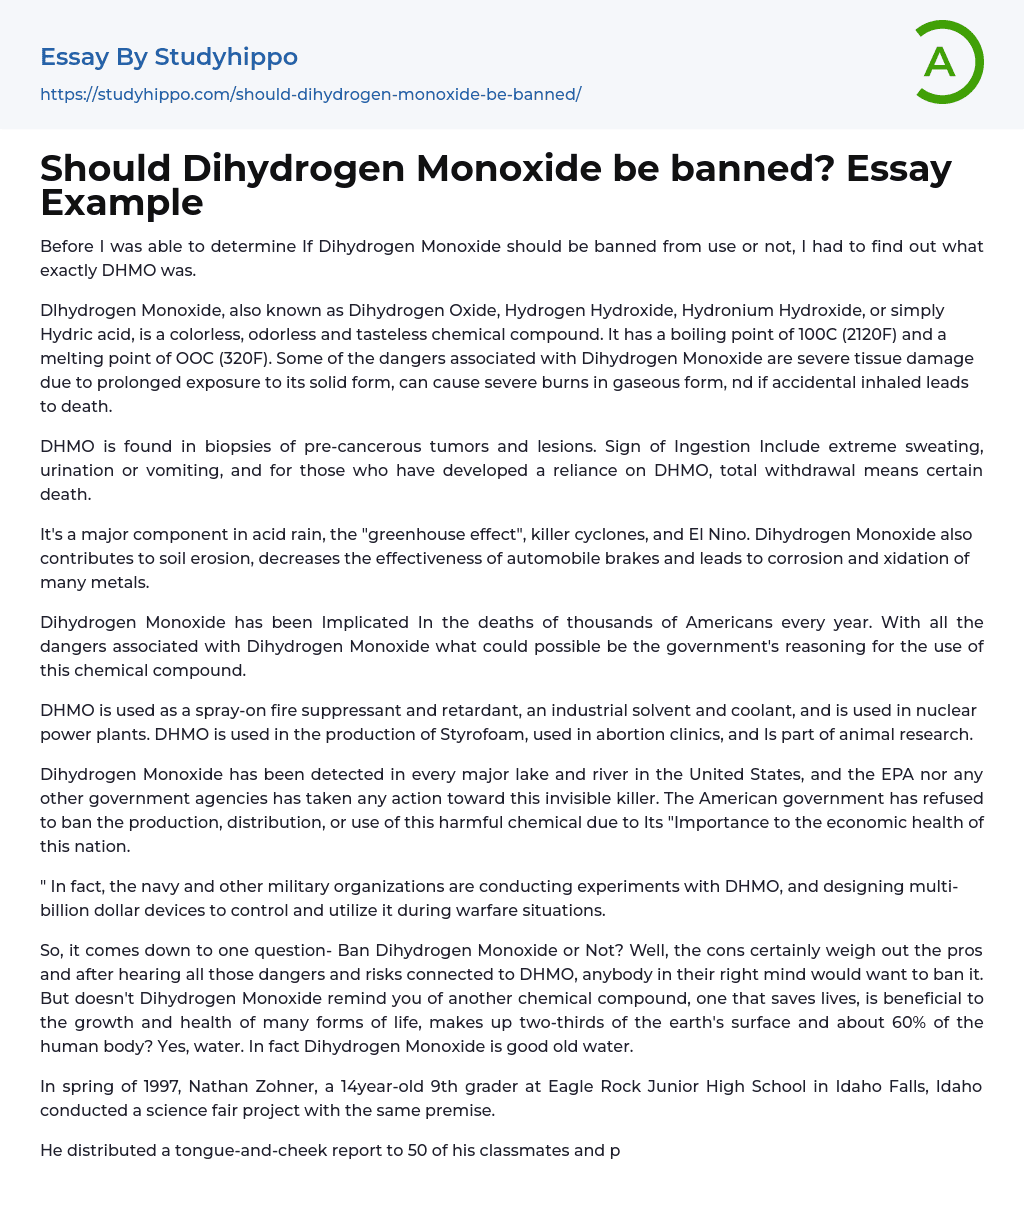 Should Dihydrogen Monoxide be banned? Essay Example